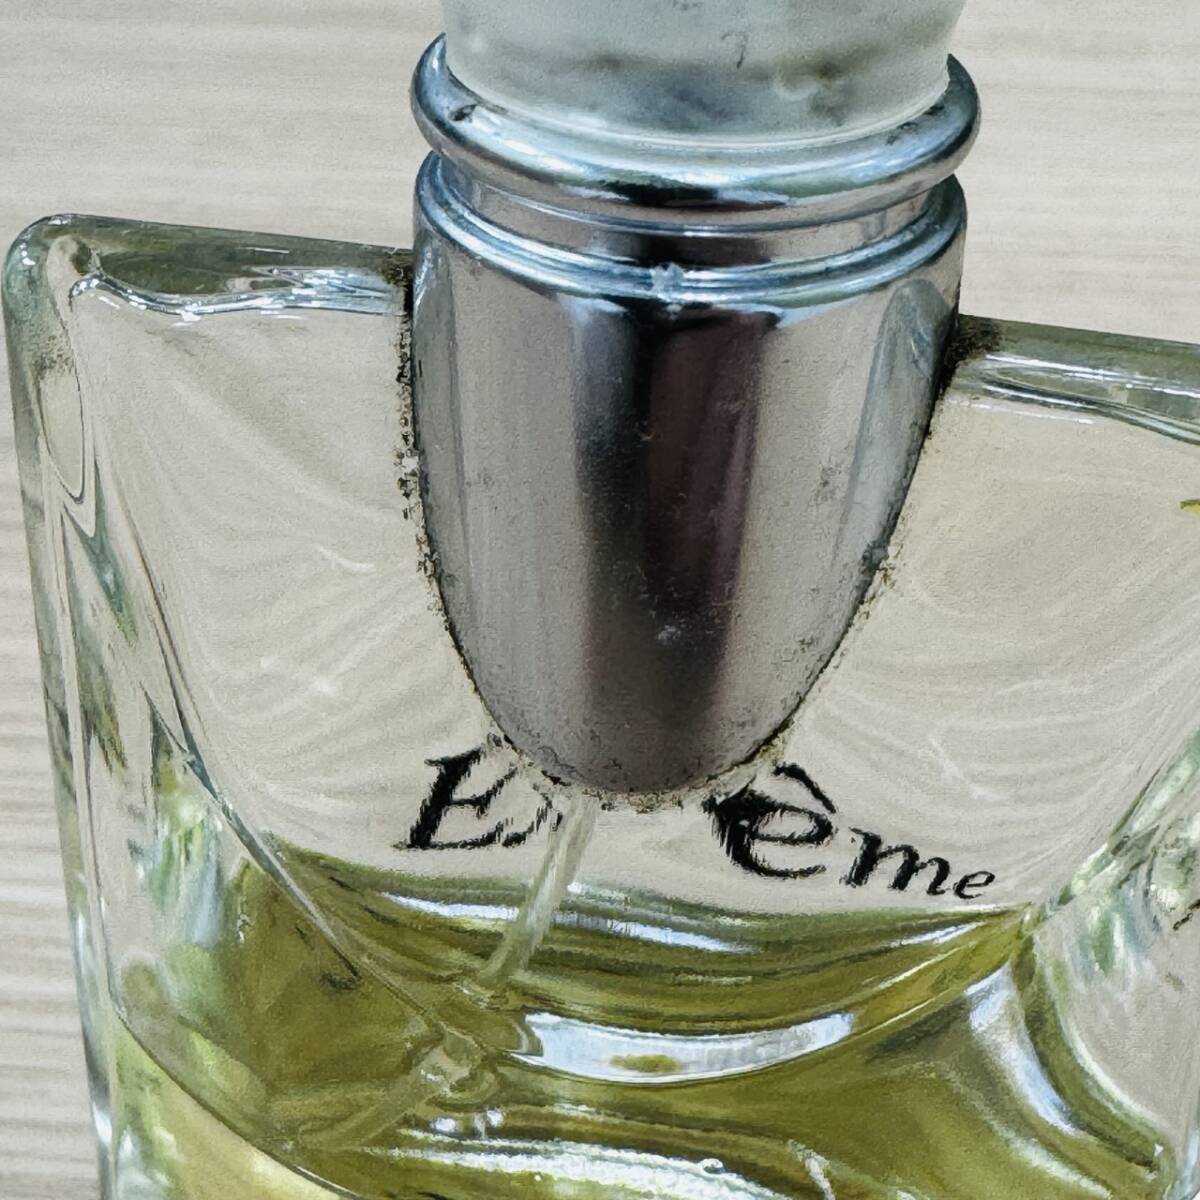 [GSA-57]1 jpy ~BVLGARI pour Homme Extreme BVLGARY pull ohm Extreme remainder 4 break up box less .50ml brand perfume 